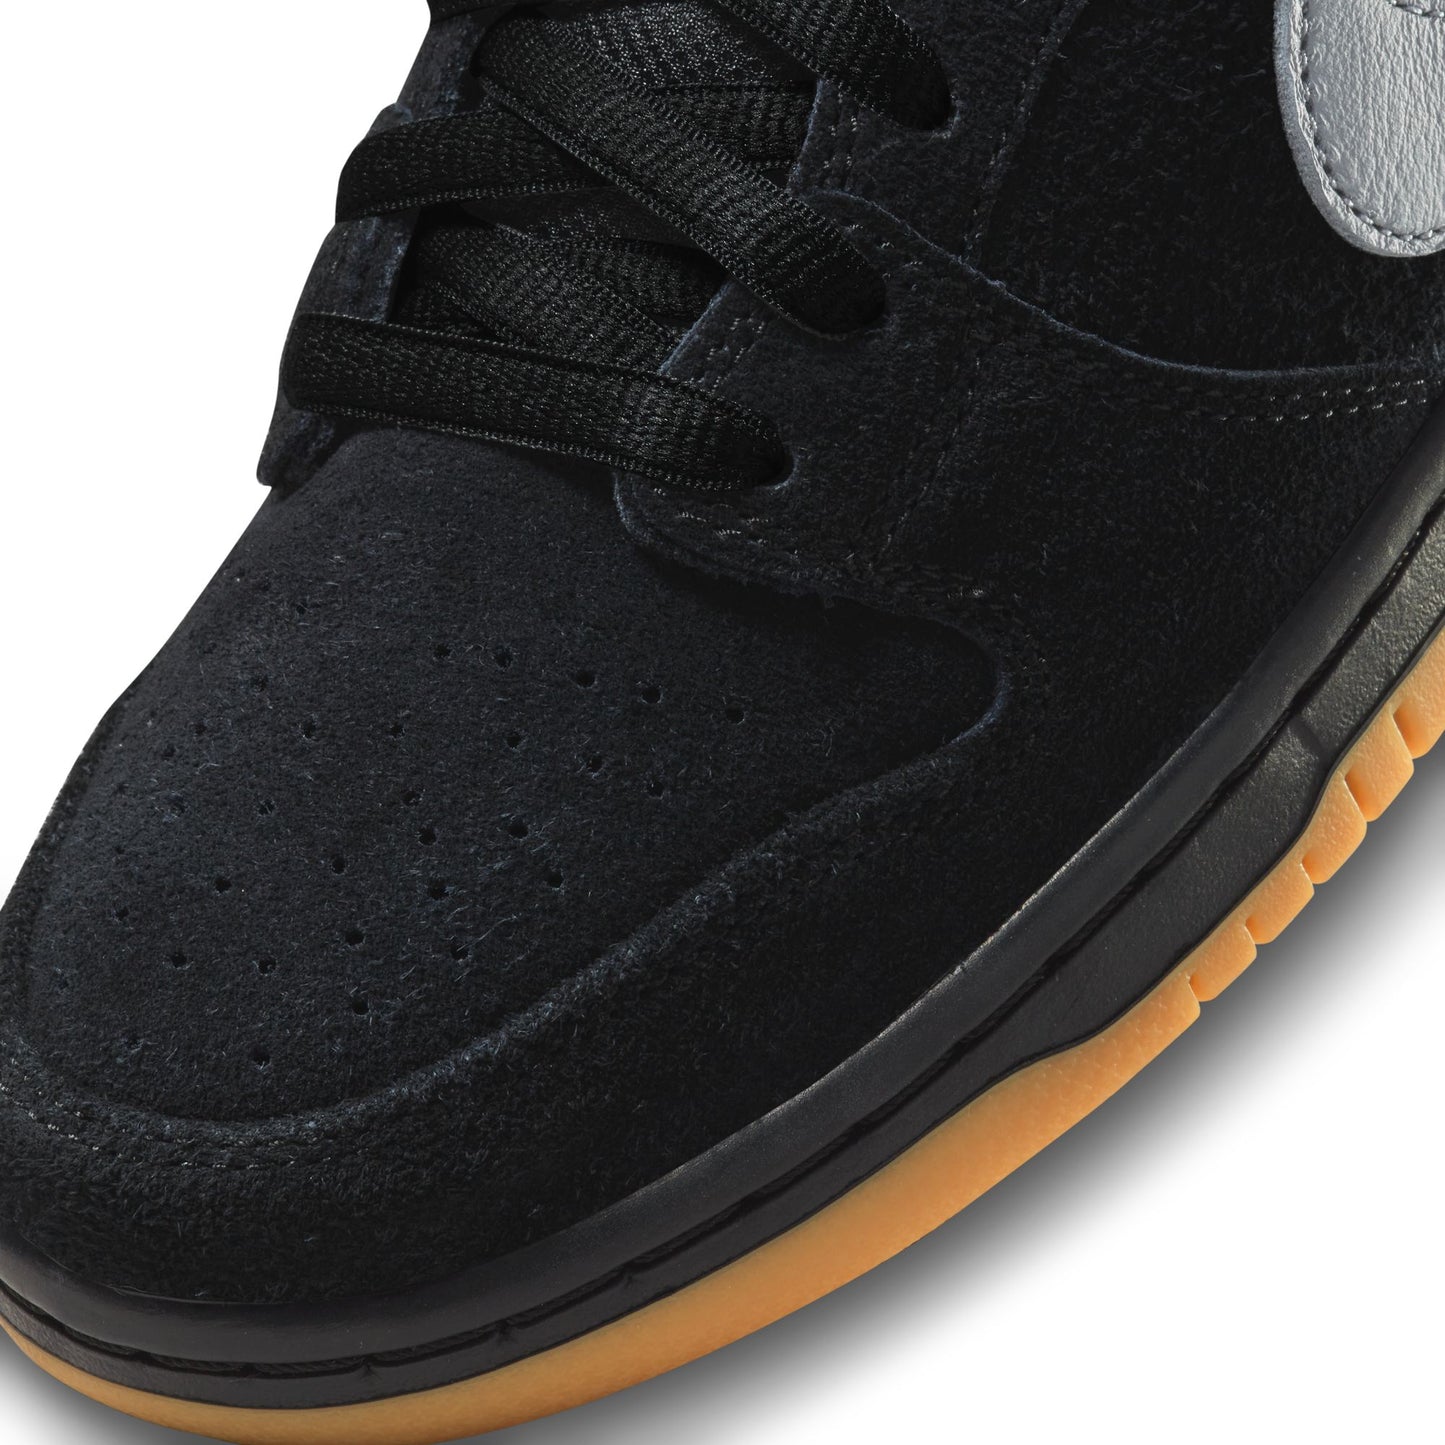 Nike SB Dunk Low Pro « Fog »black cool grey black black